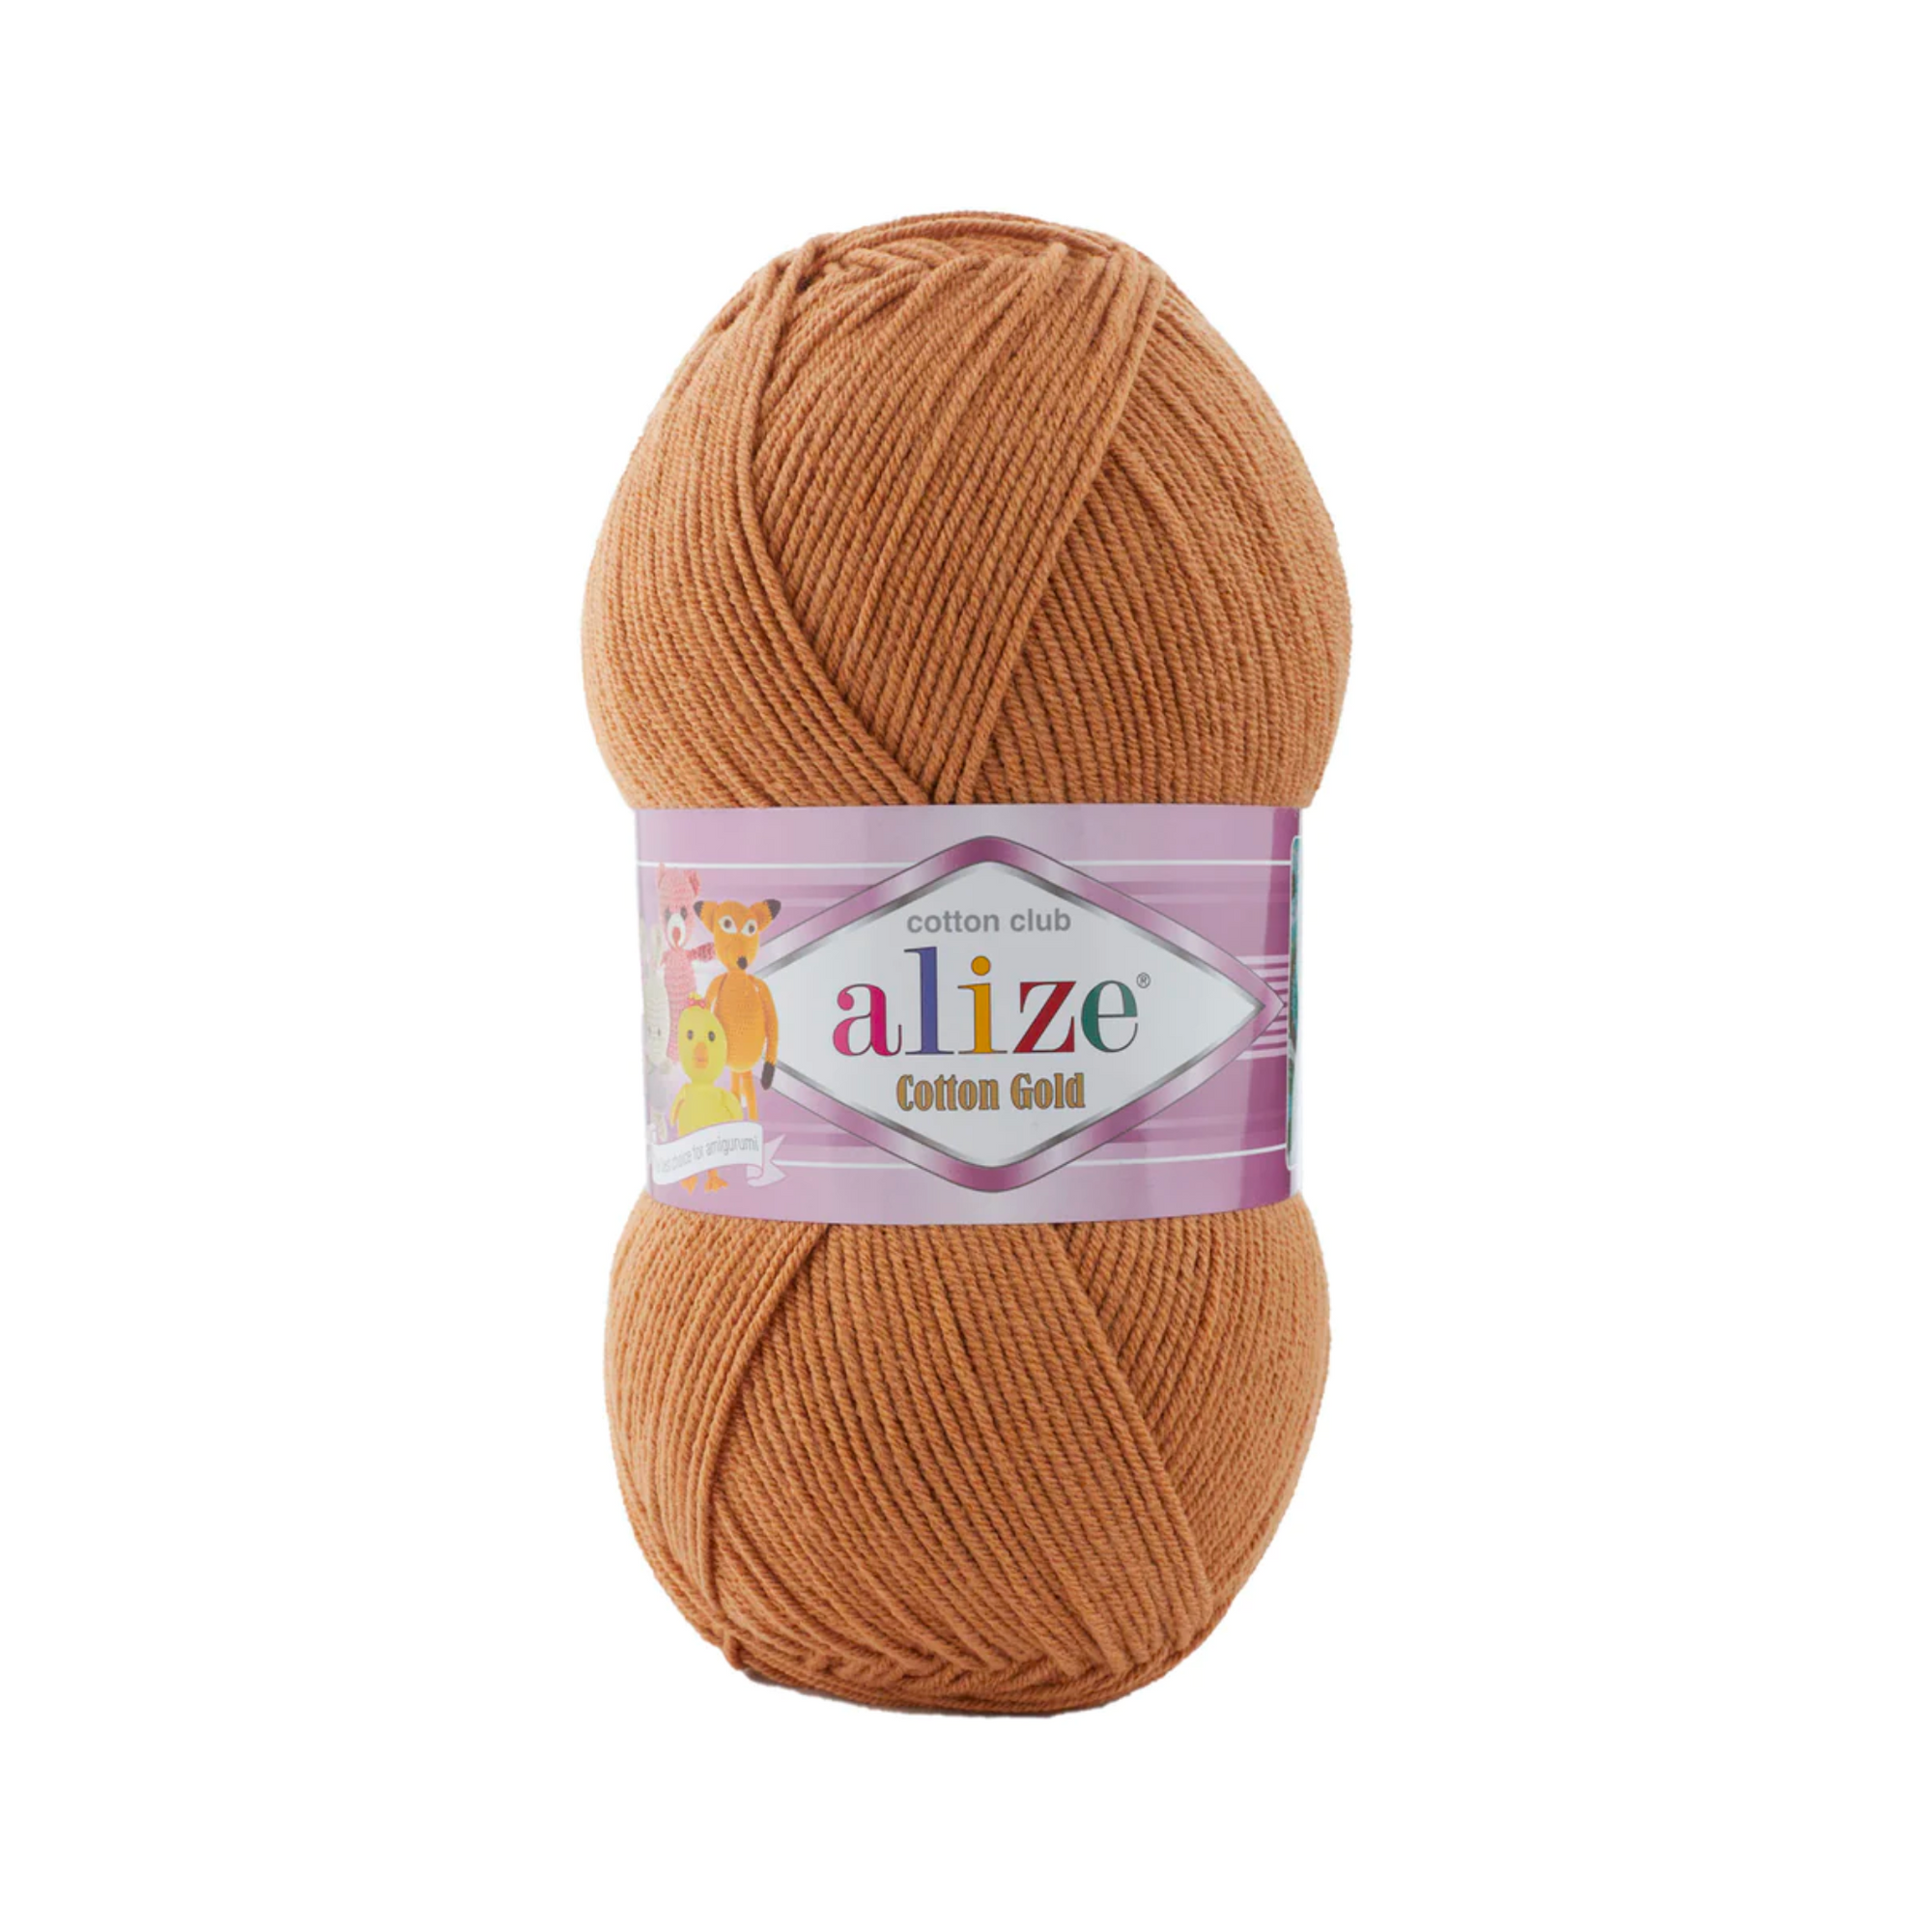 Alize Cotton Gold Knitting Yarn, Grey Melange - 21